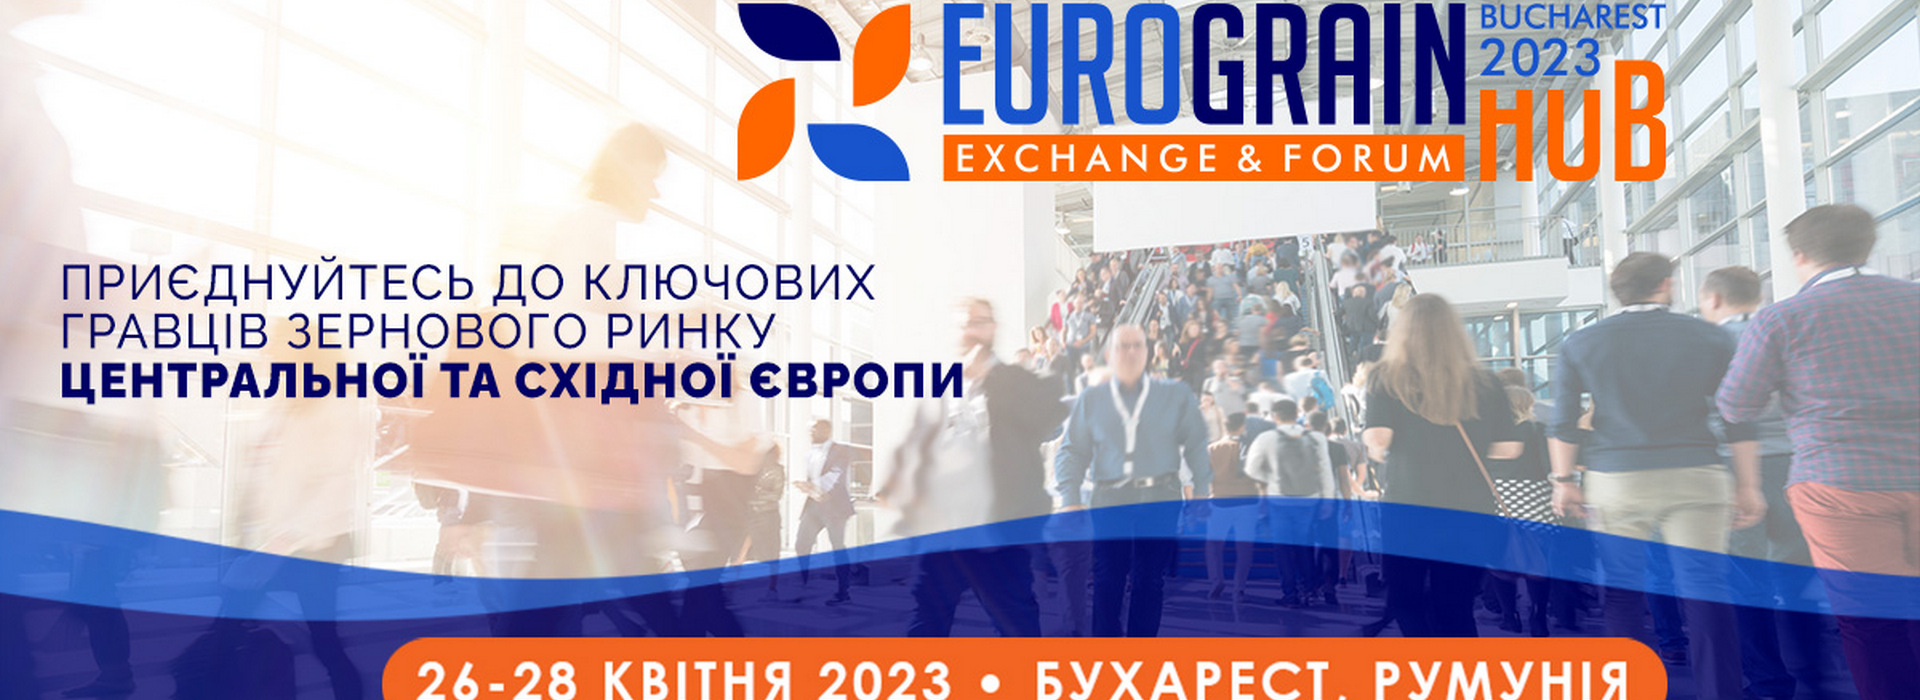 Euro Grain Hub Exchange & Forum